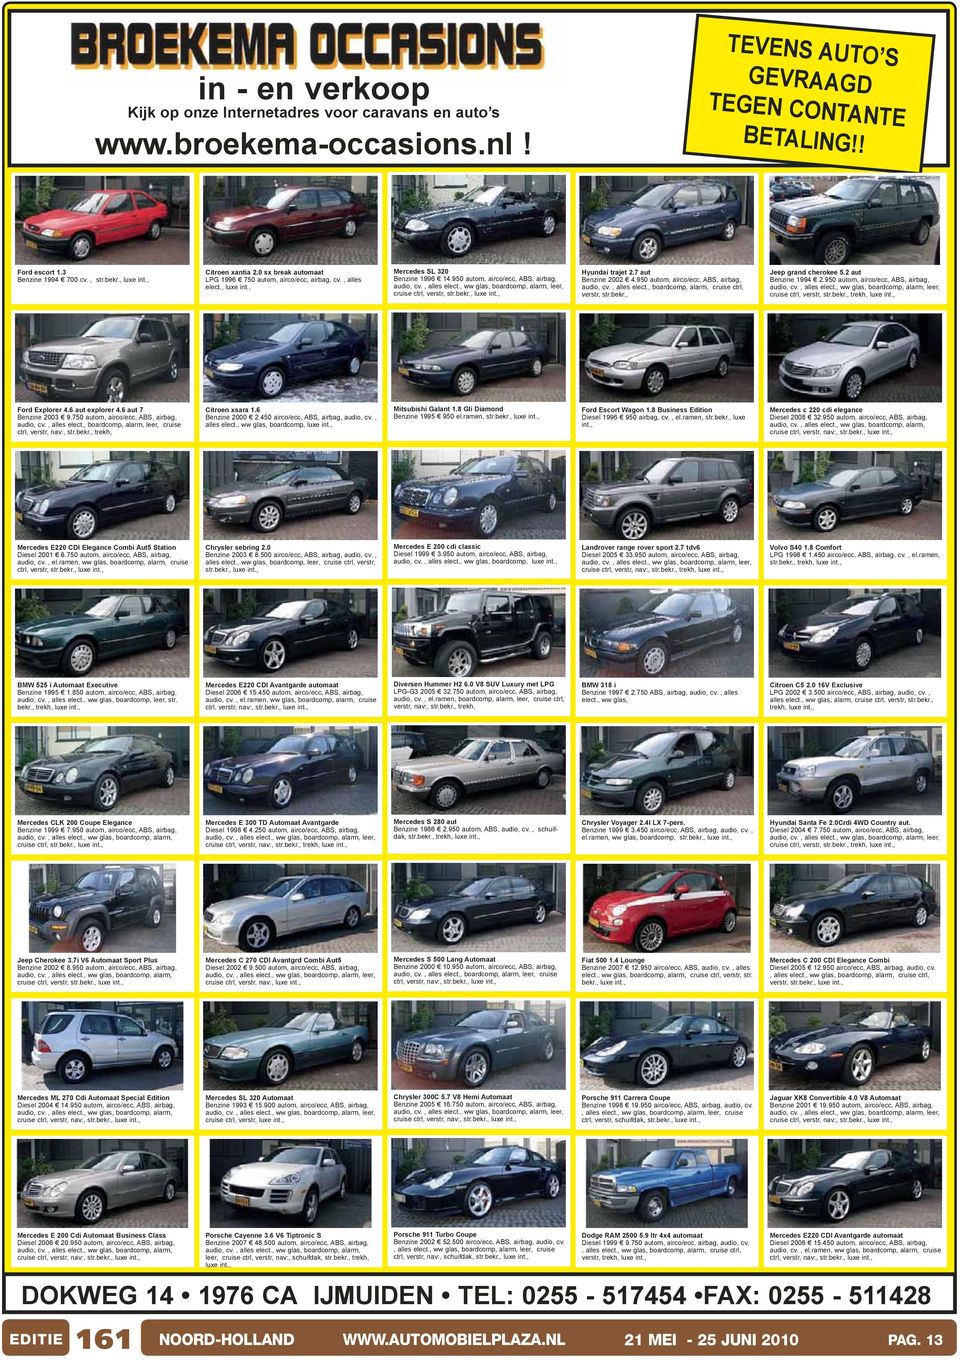 , Hyundai trajet 2.7 aut Benzine 2002 4.950 autom, airco/ecc, ABS, airbag, audio, cv., alles elect., boardcomp, alarm, cruise ctrl, verstr, str.bekr., Jeep grand cherokee 5.2 aut Benzine 1994 2.